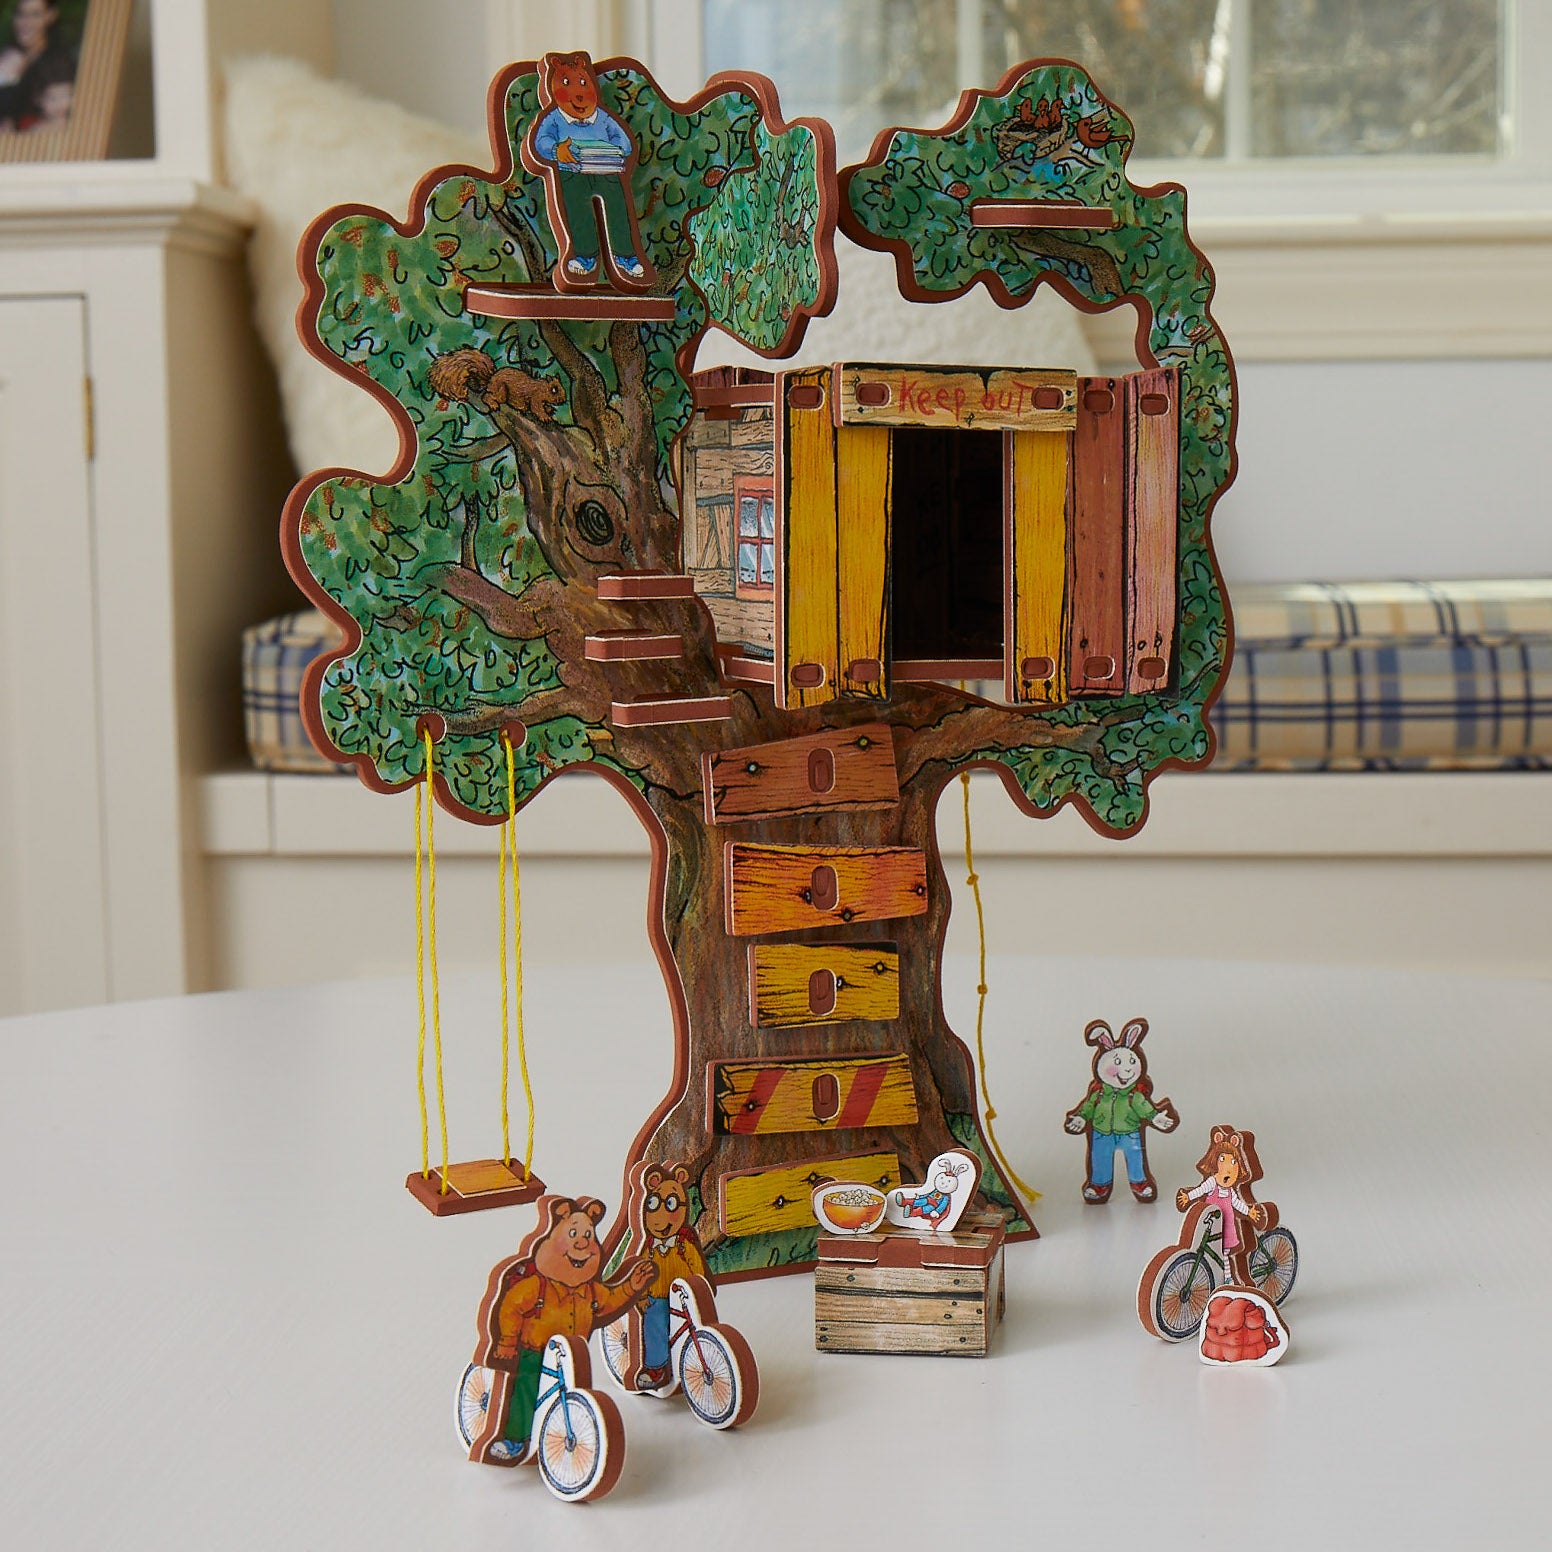 tree house toy